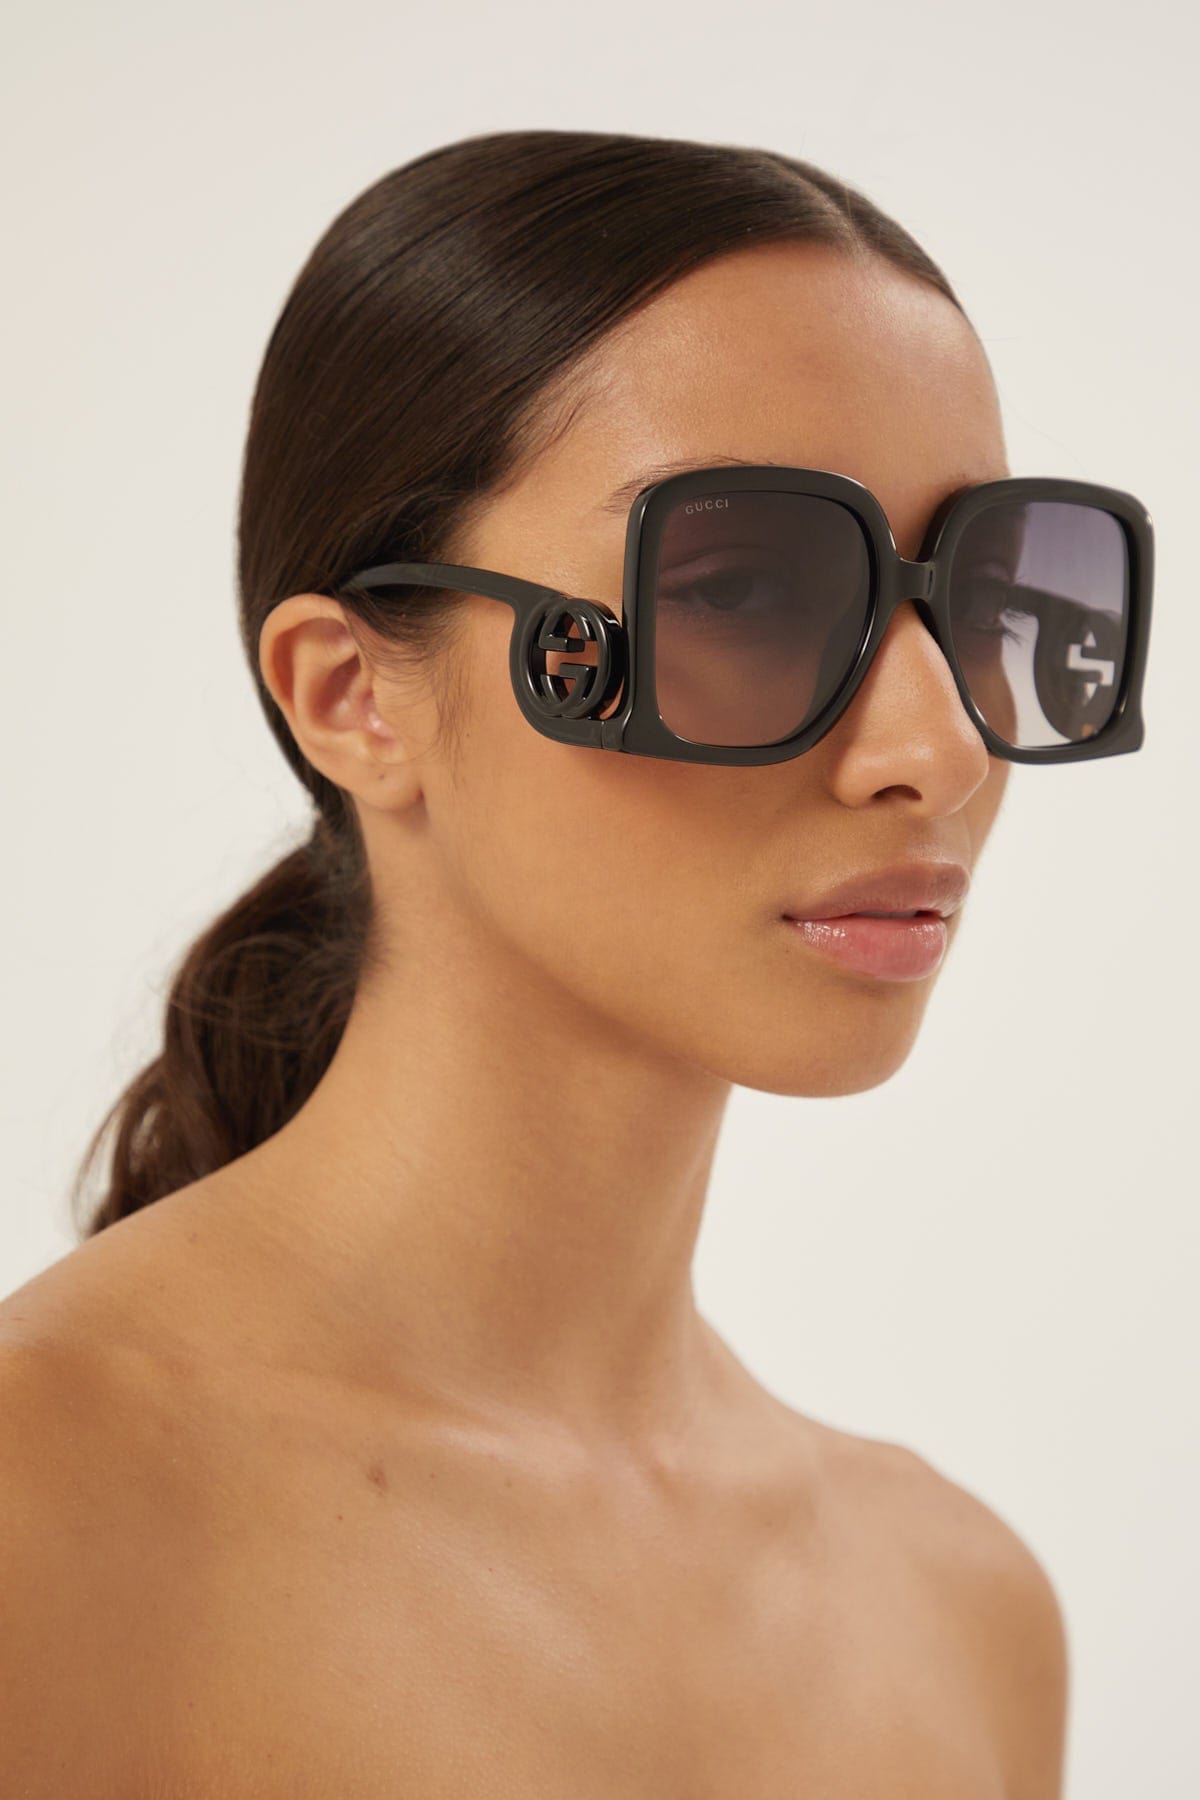 Gucci black butterfly shape sunglasses - Eyewear Club